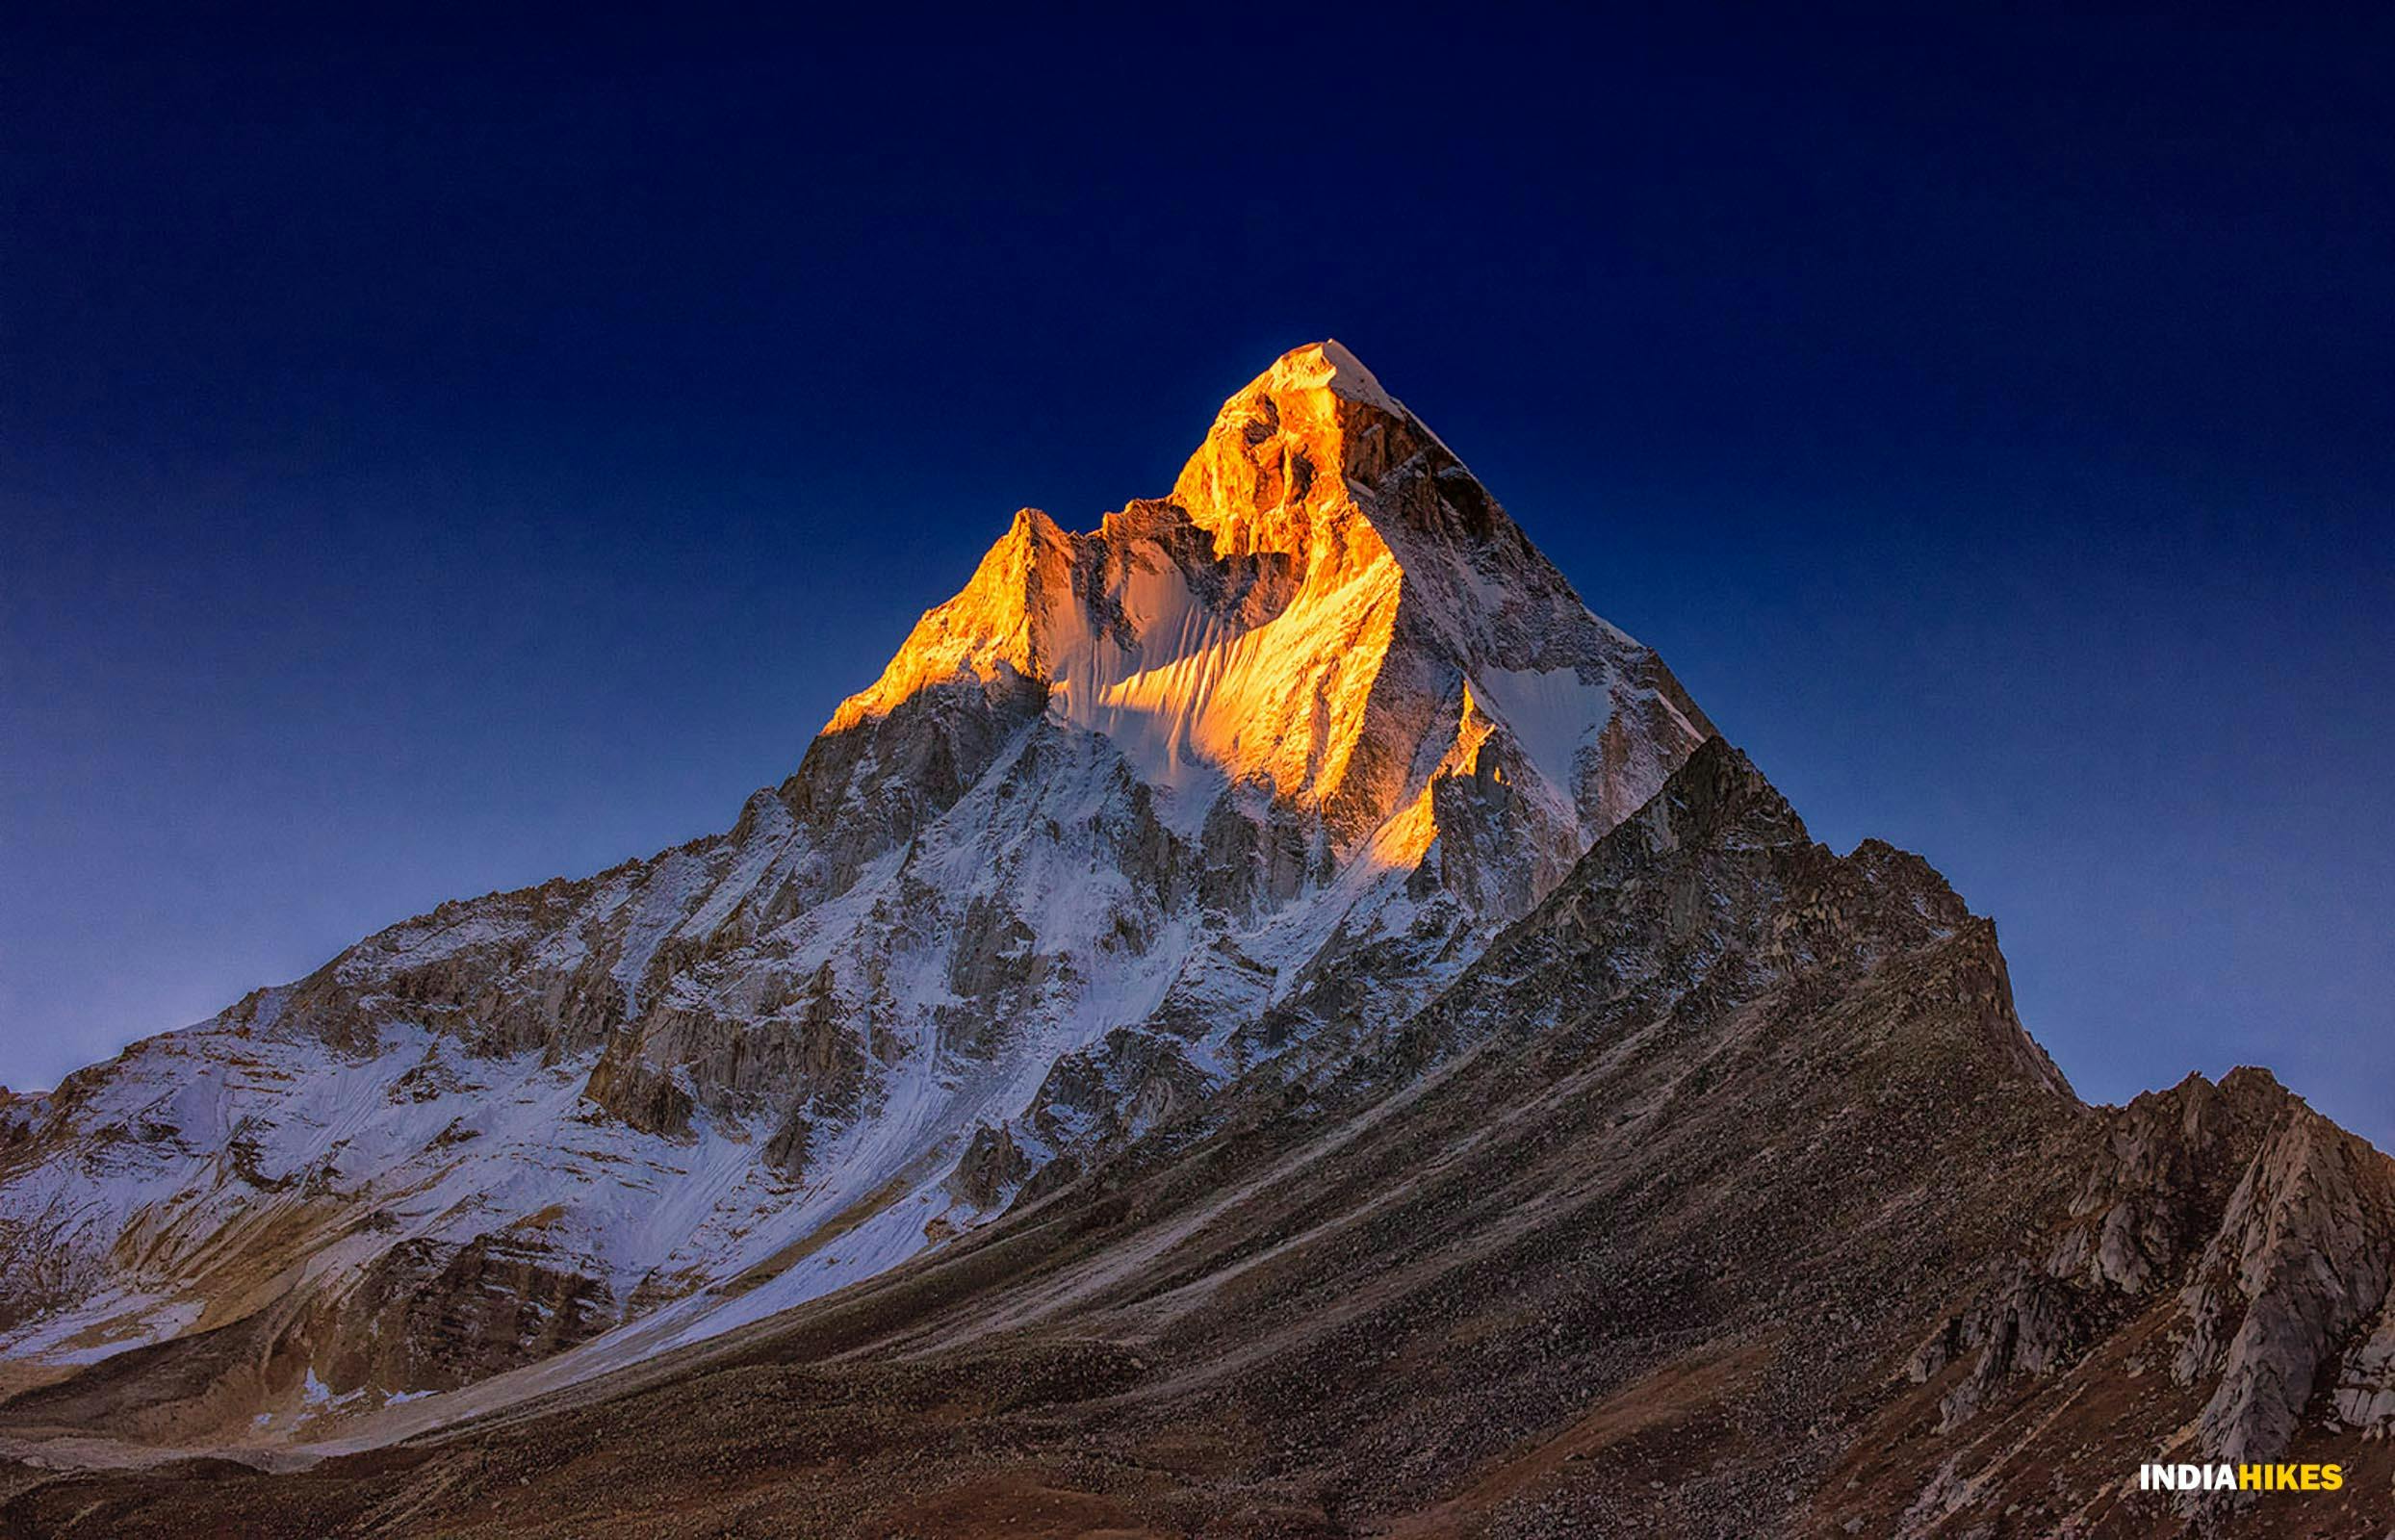 de84253e e0cc 4d69 a705 469b7e0276ad gamukh tapovan dr haridarshan   golden light on mt shivling summit during sunrise alpine glow mountain views 